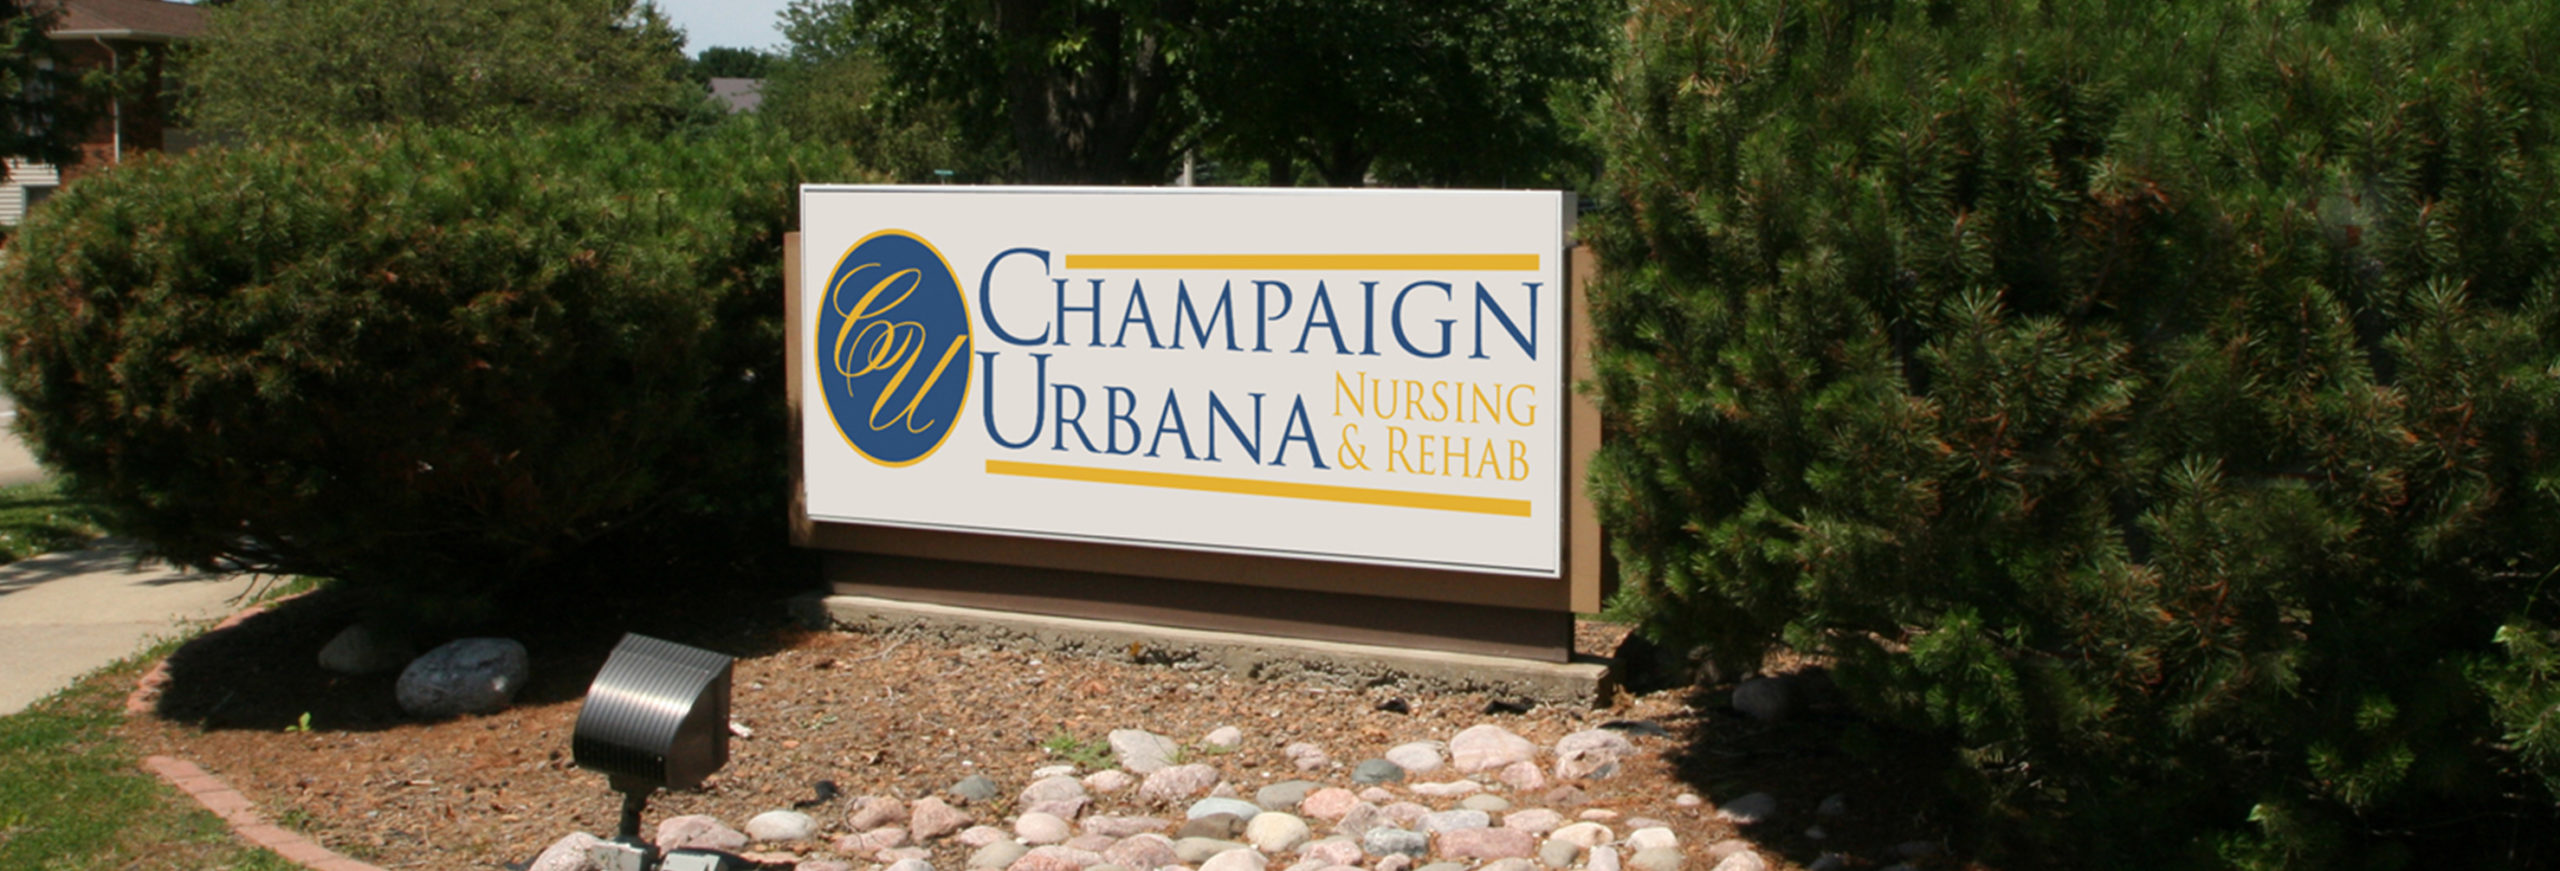 Champaign Urbana Nursing & Rehab